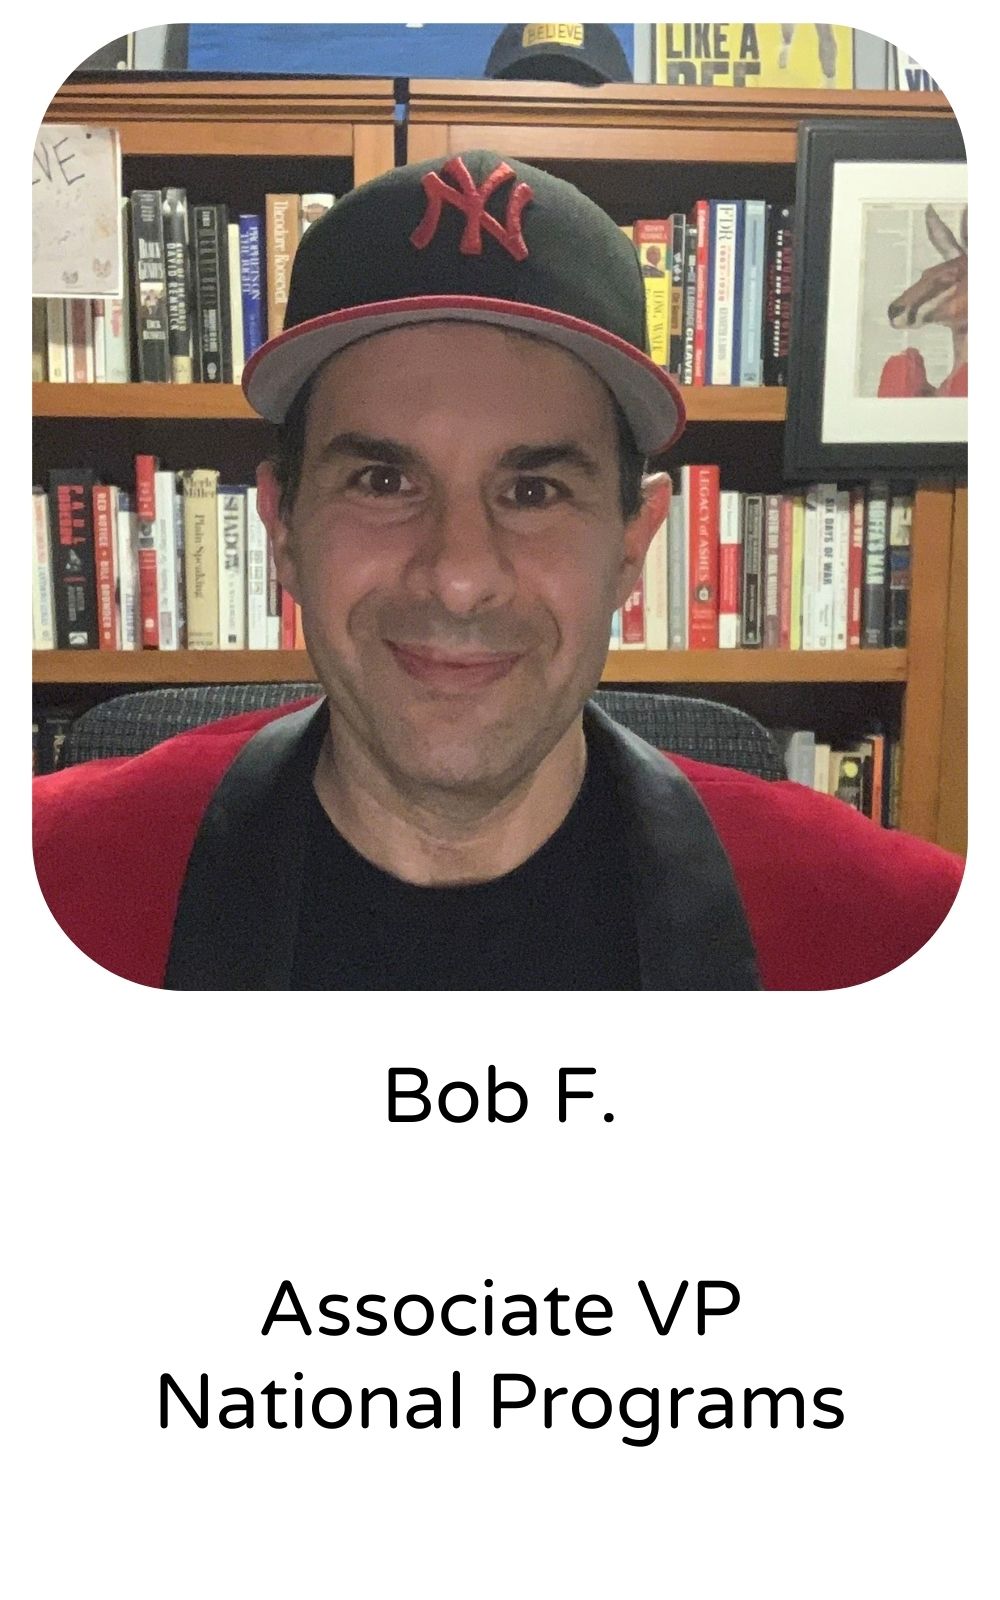 Bob F, Associate VP, National Programs